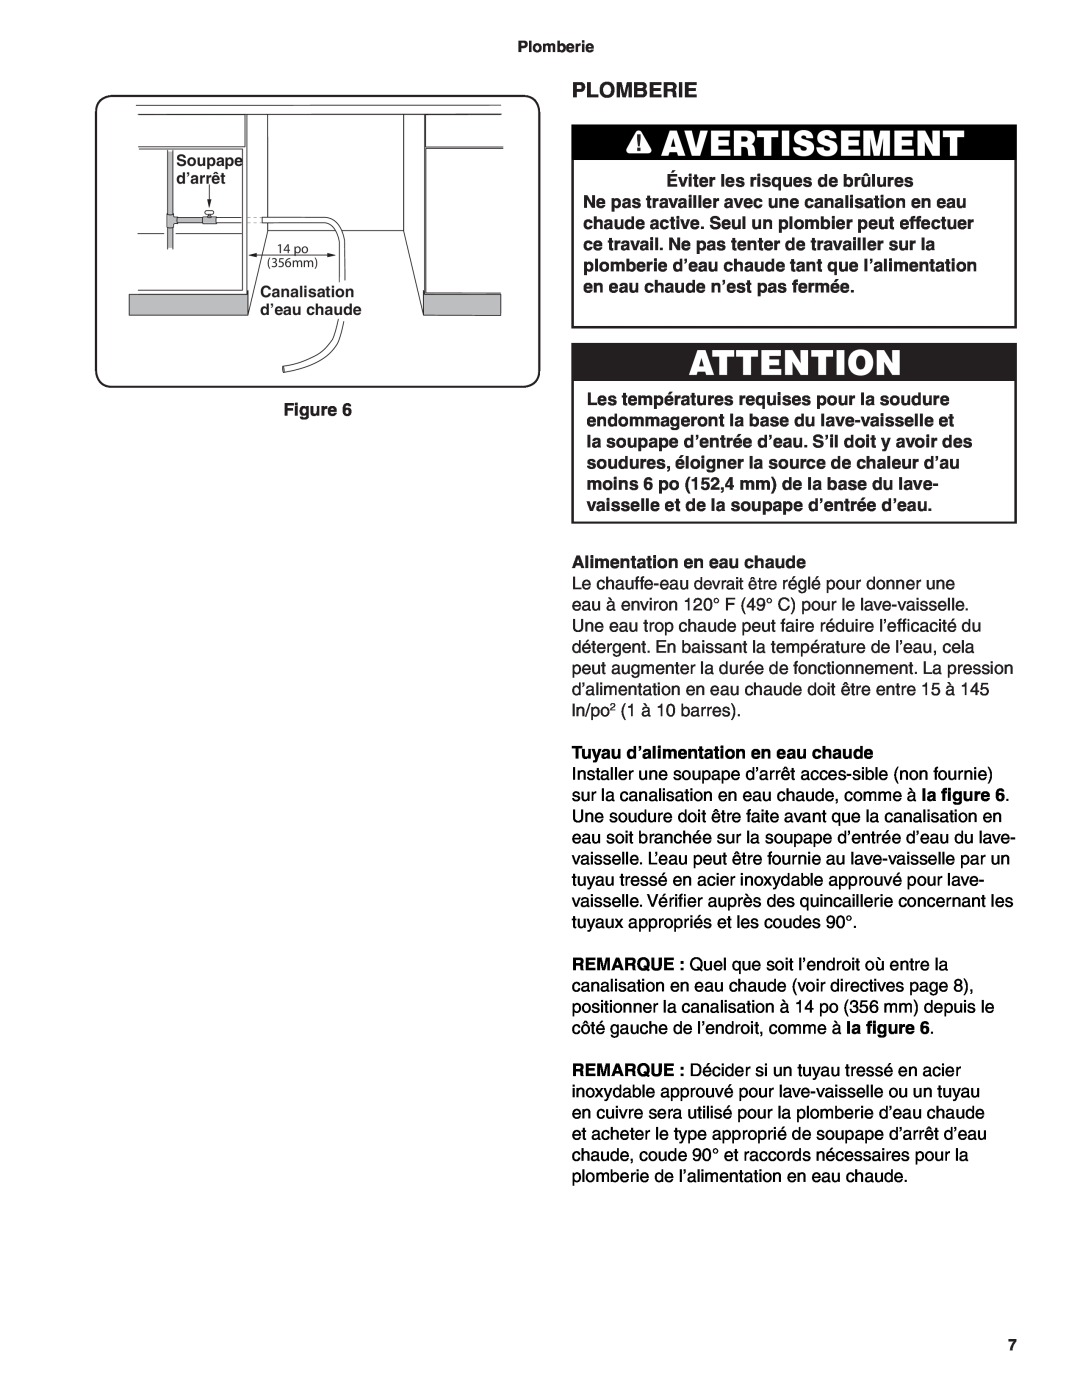 Bosch Appliances BSH Dishwasher important safety instructions Plomberie, Avertissement 